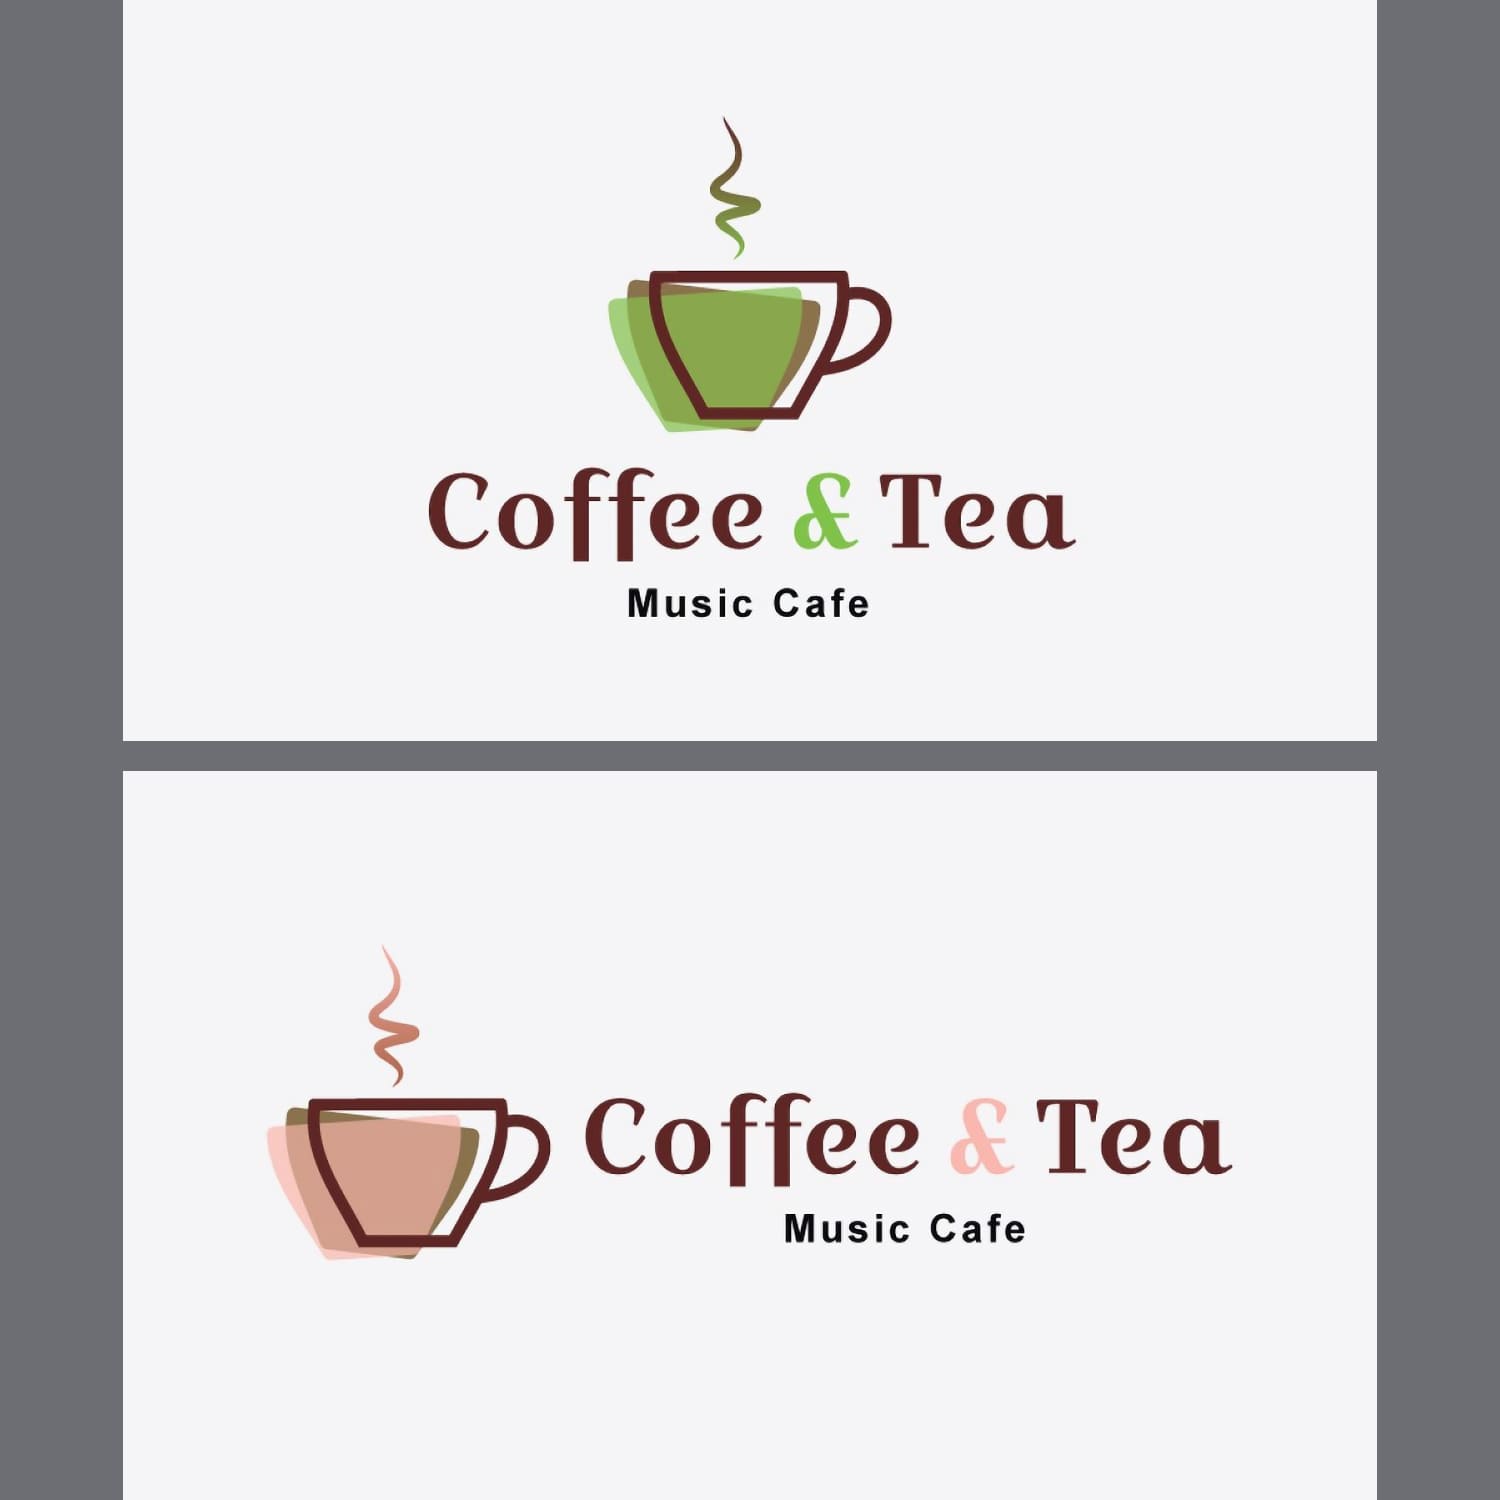 Coffee & Tea Logo created by MotionMount.